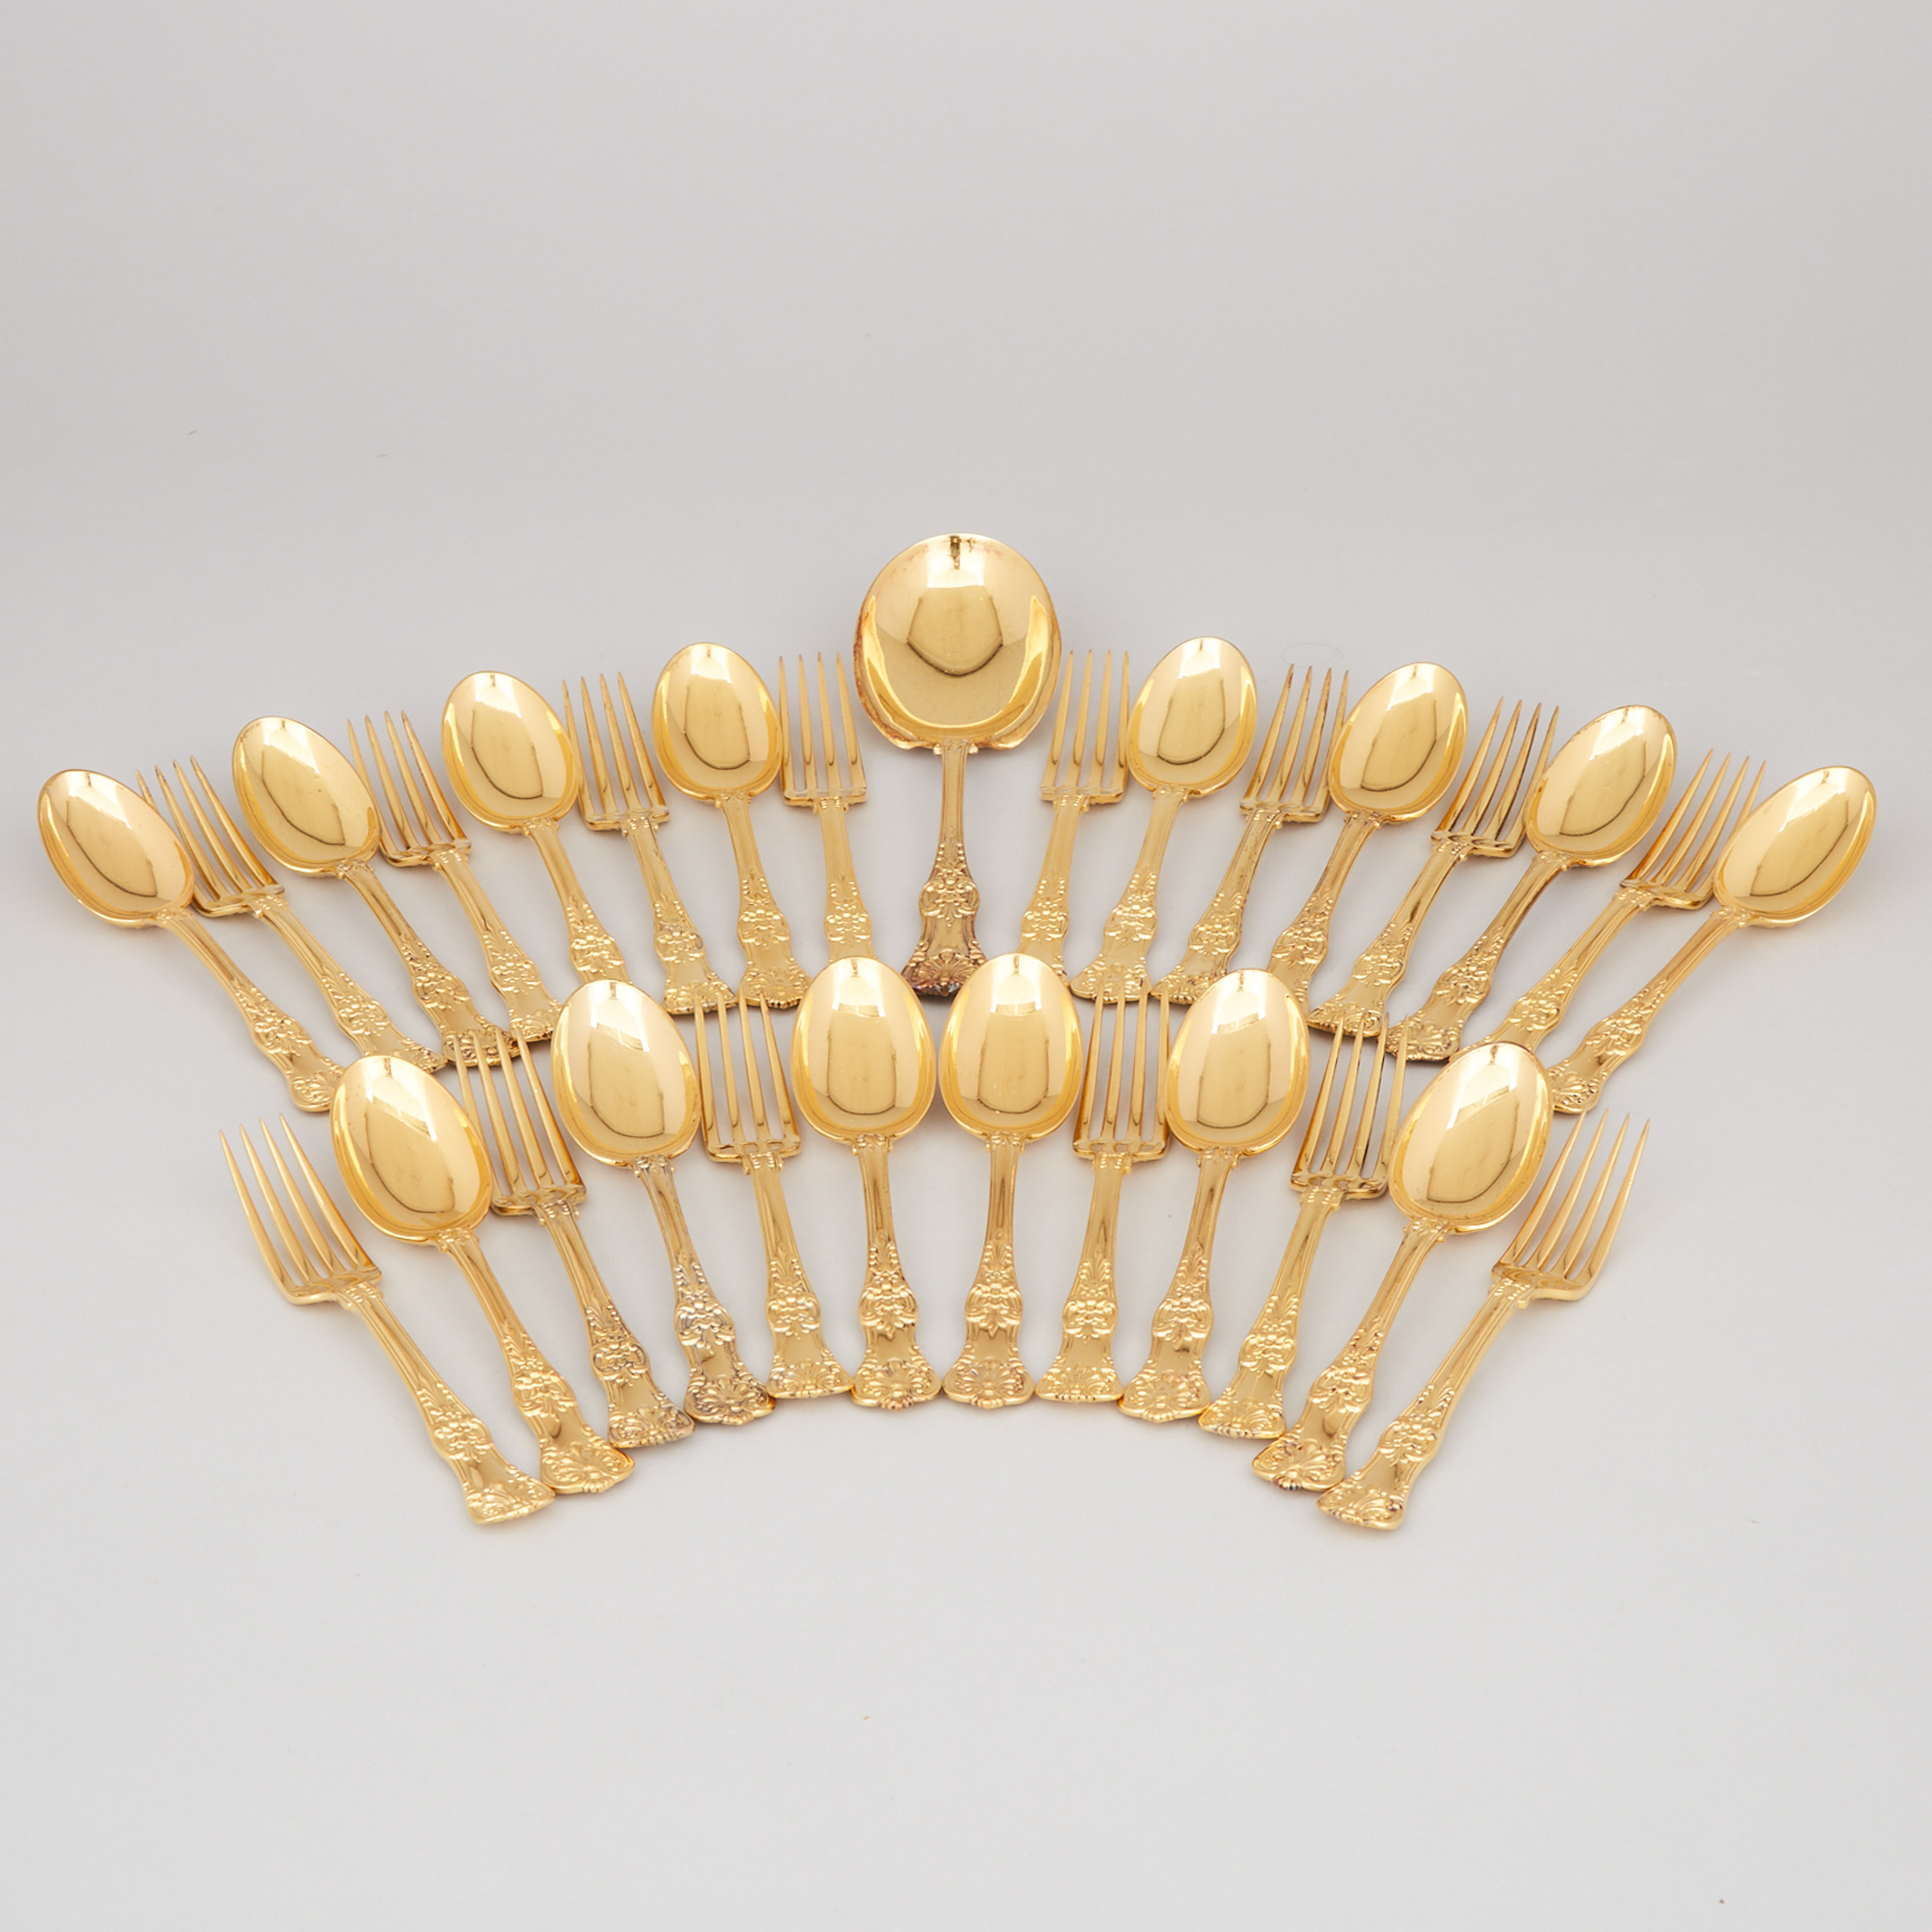 American Silver-Gilt ‘English King’ Pattern Dessert Flatware Service, Tiffany & Co., New York, N.Y., 20th century